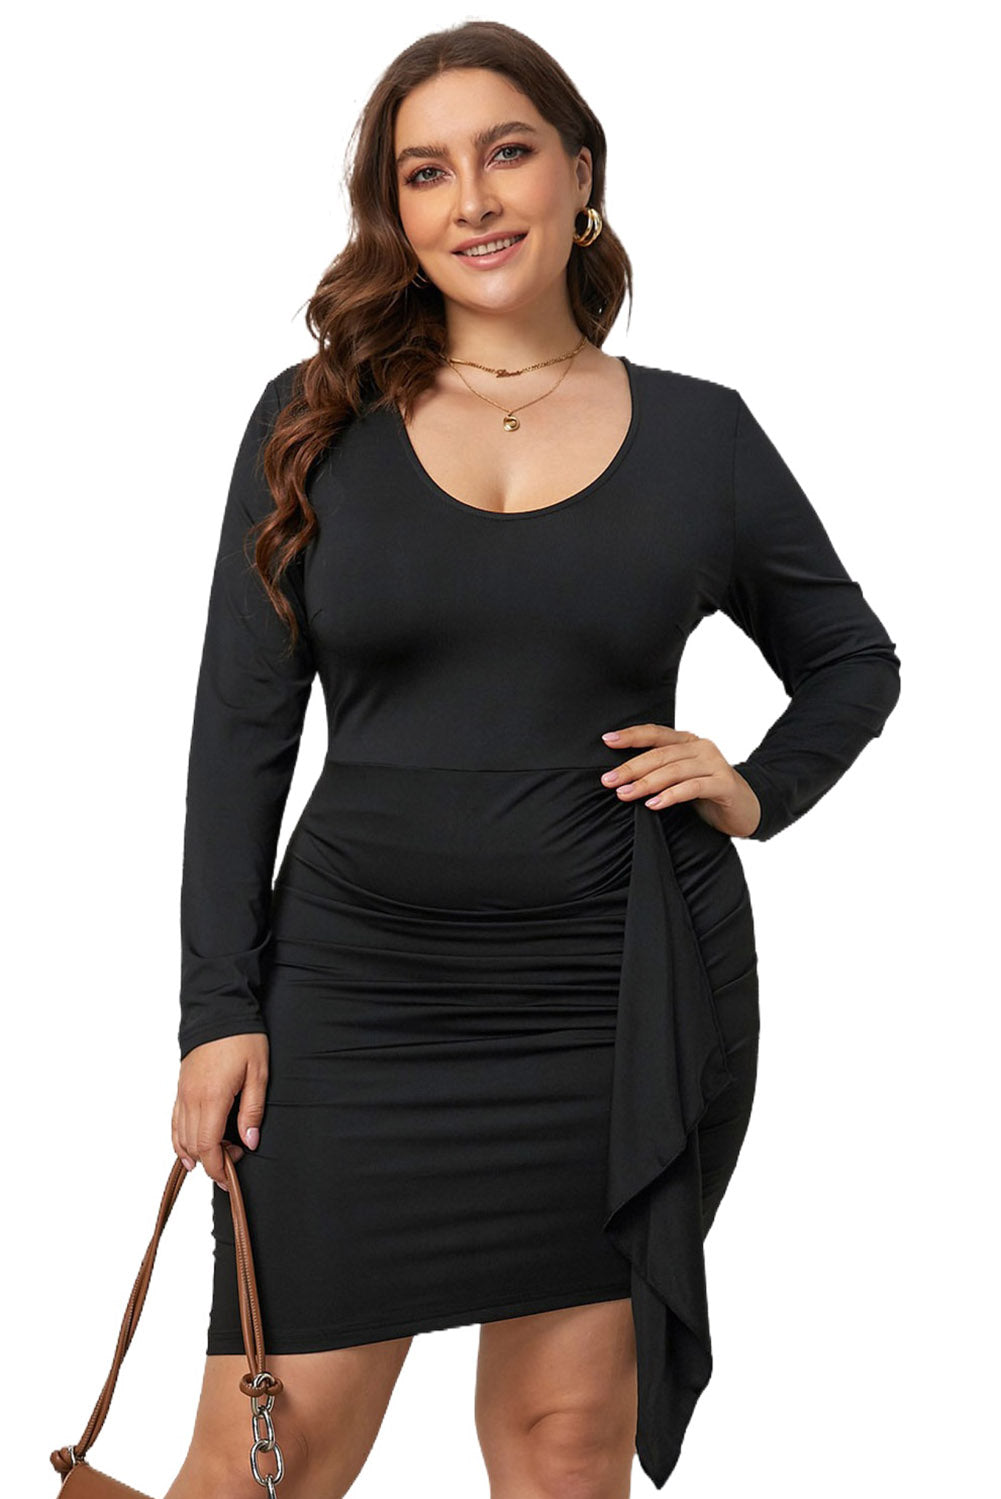 Keep It Real Plus Size Bodycon Dress For Sale - Fashion Clothing | Upskalez